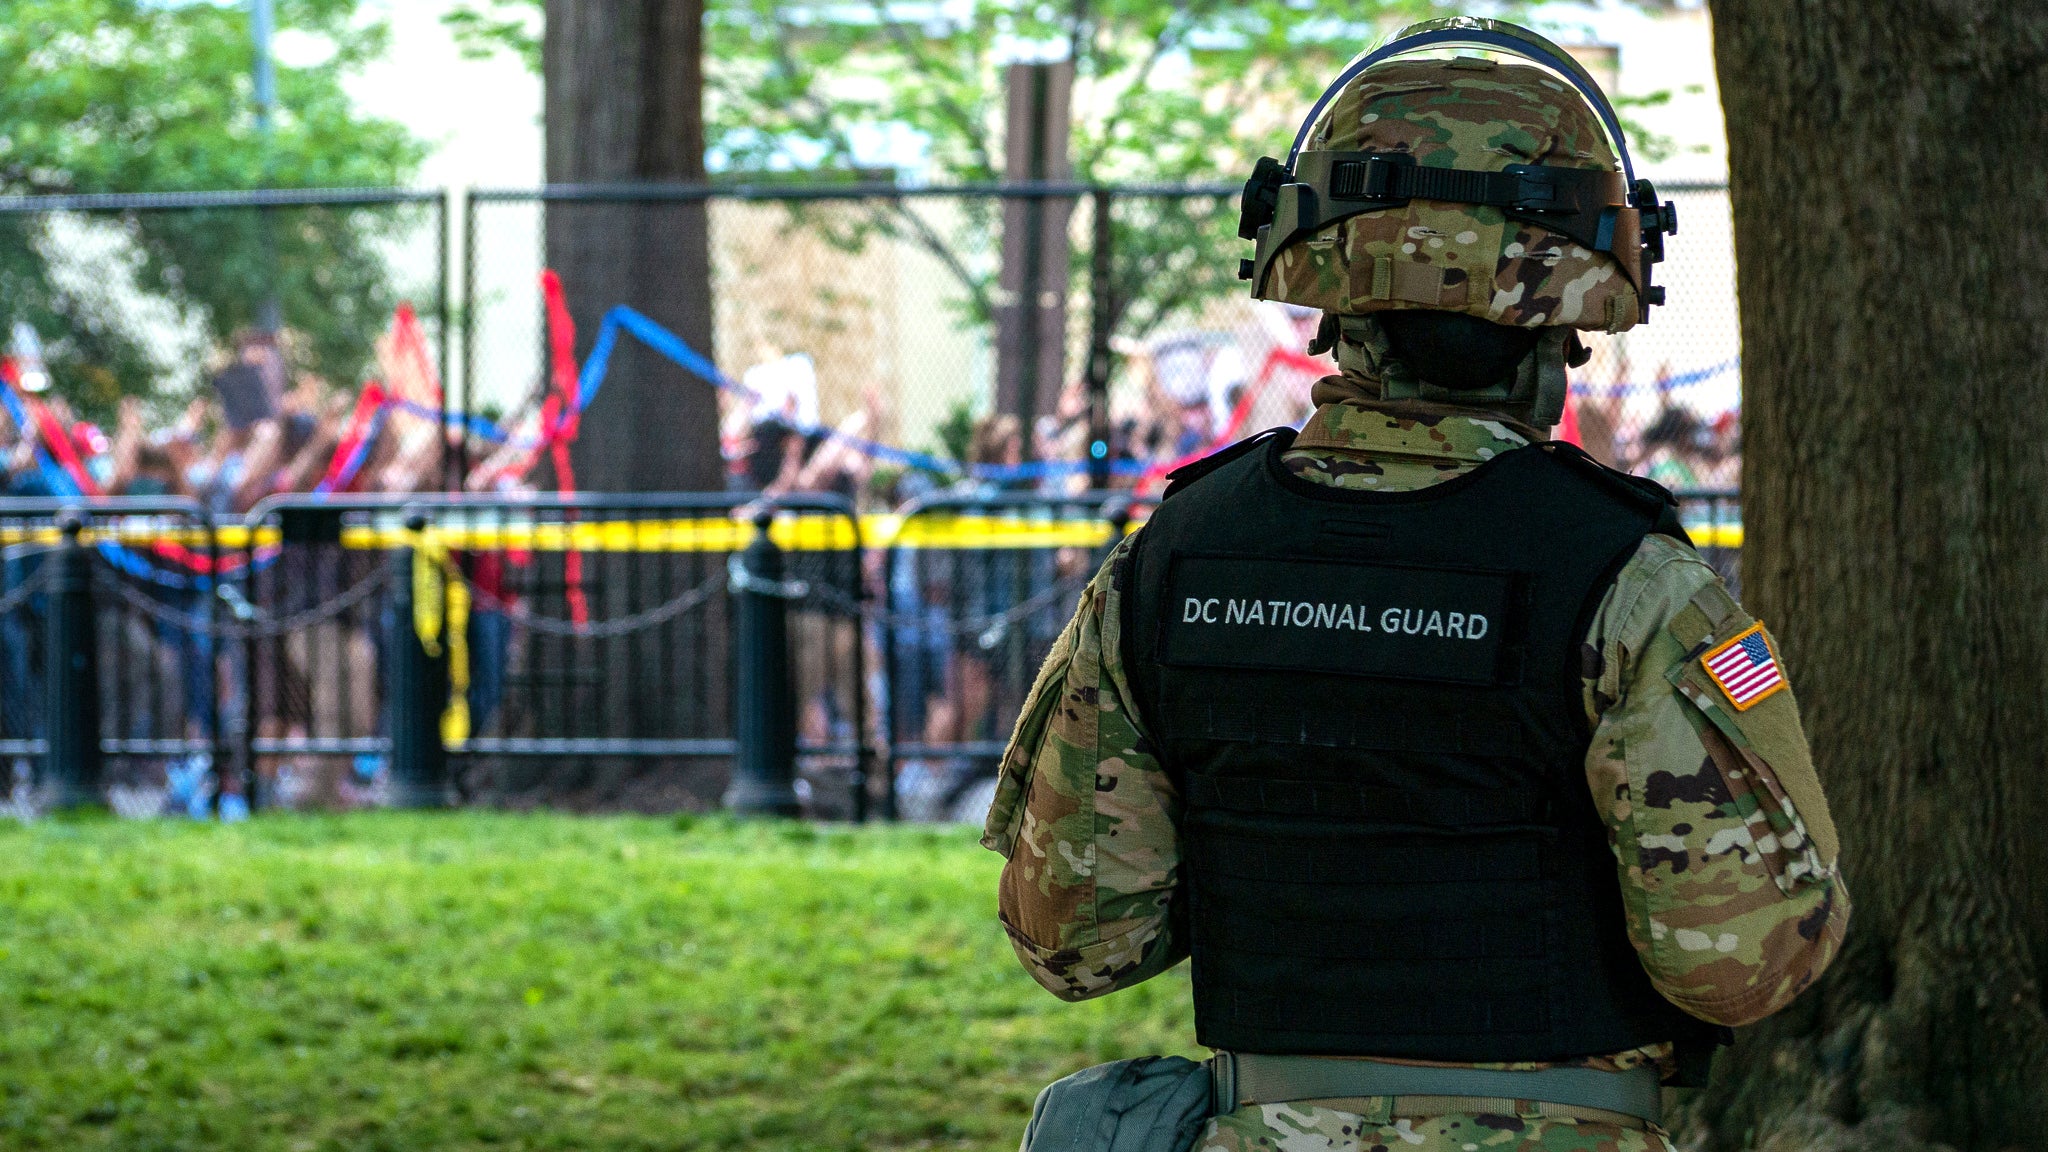 DC National Guard ssoldier